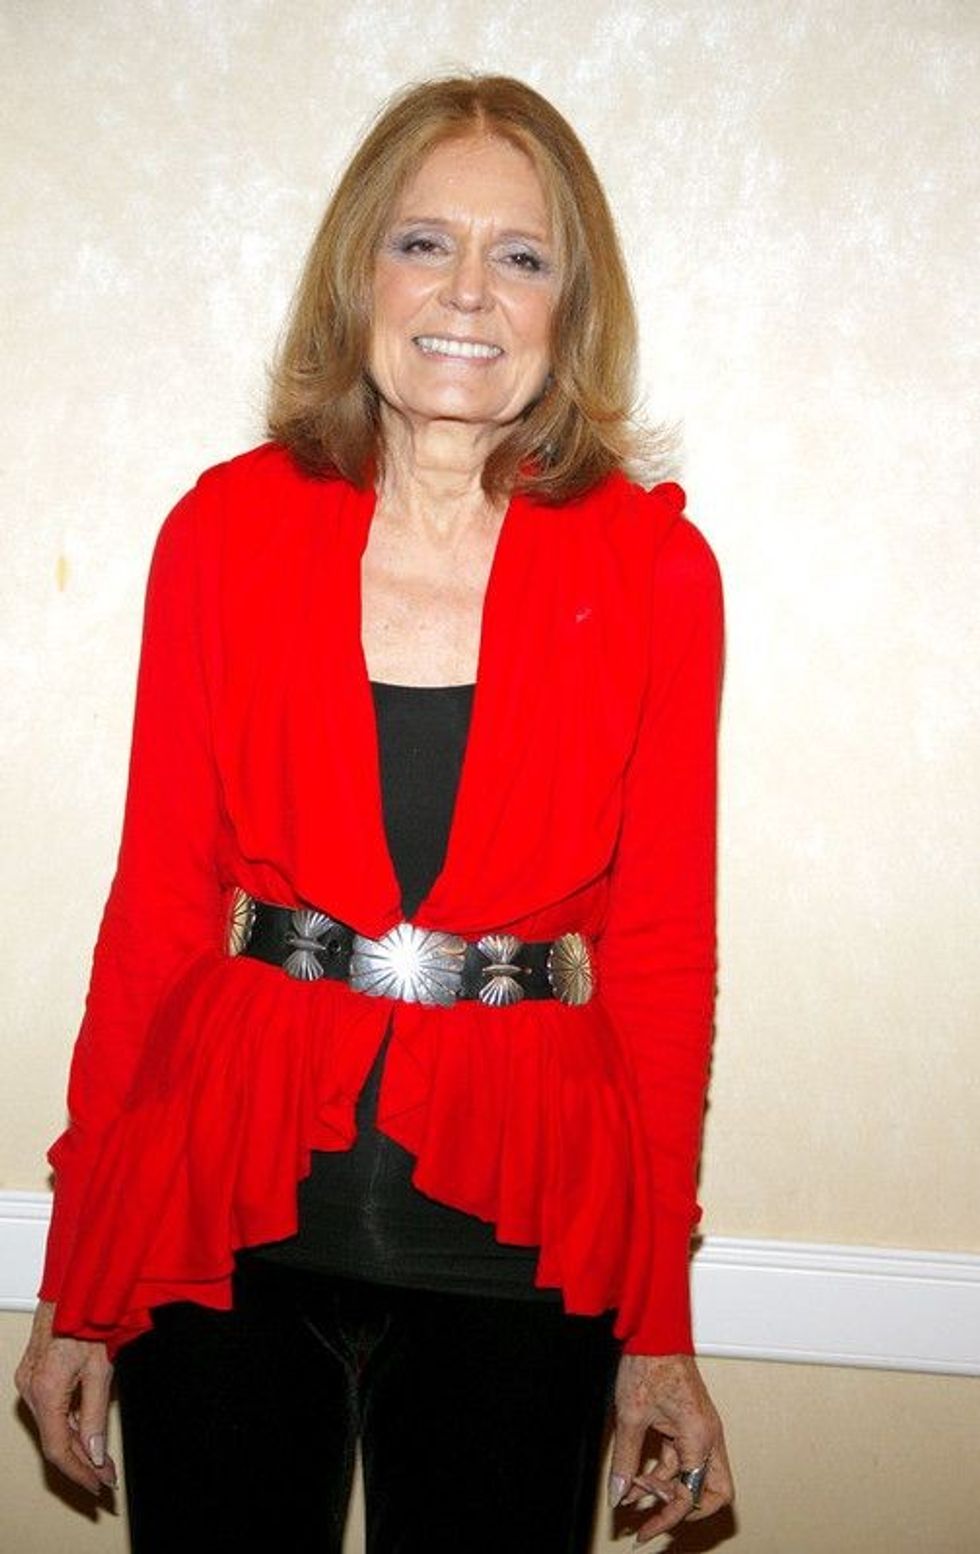 Gloria Steinem at an event